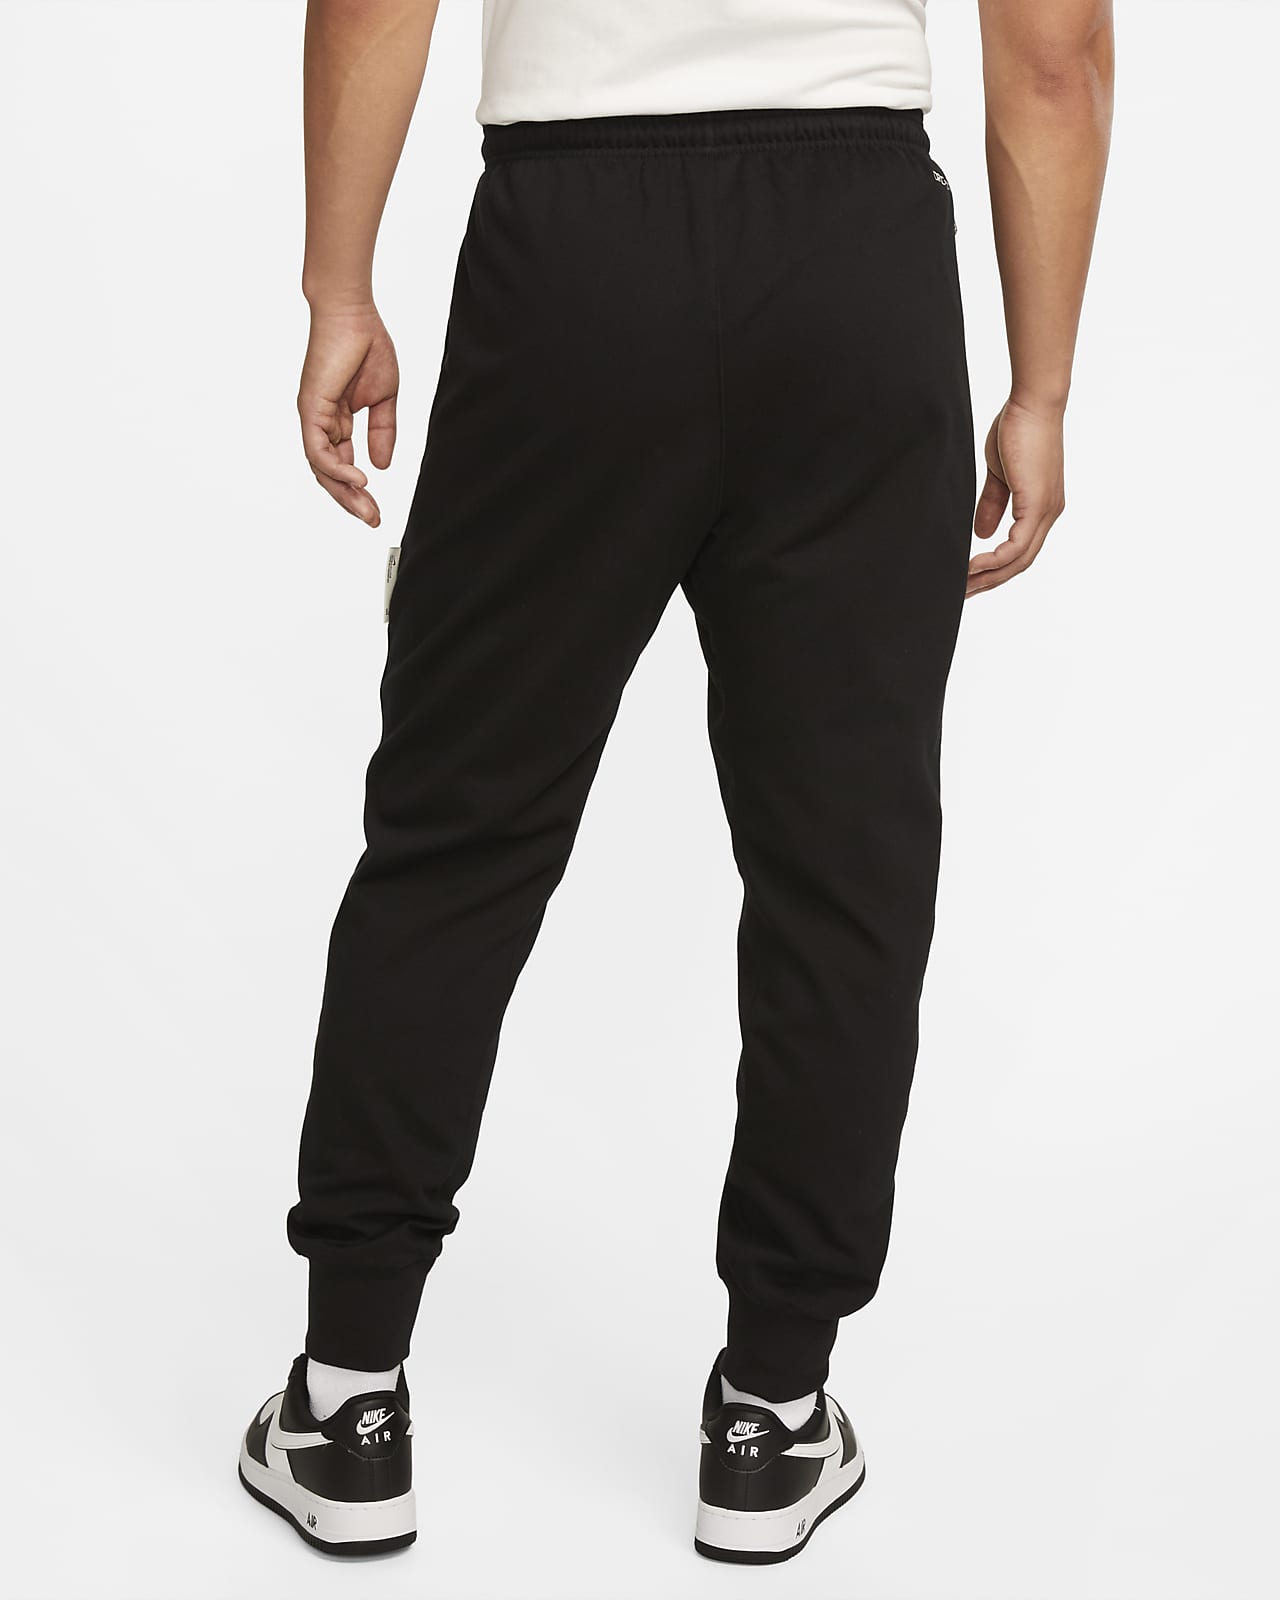 Giannis Standard Issue Men's Dri-FIT Pants. Nike.com